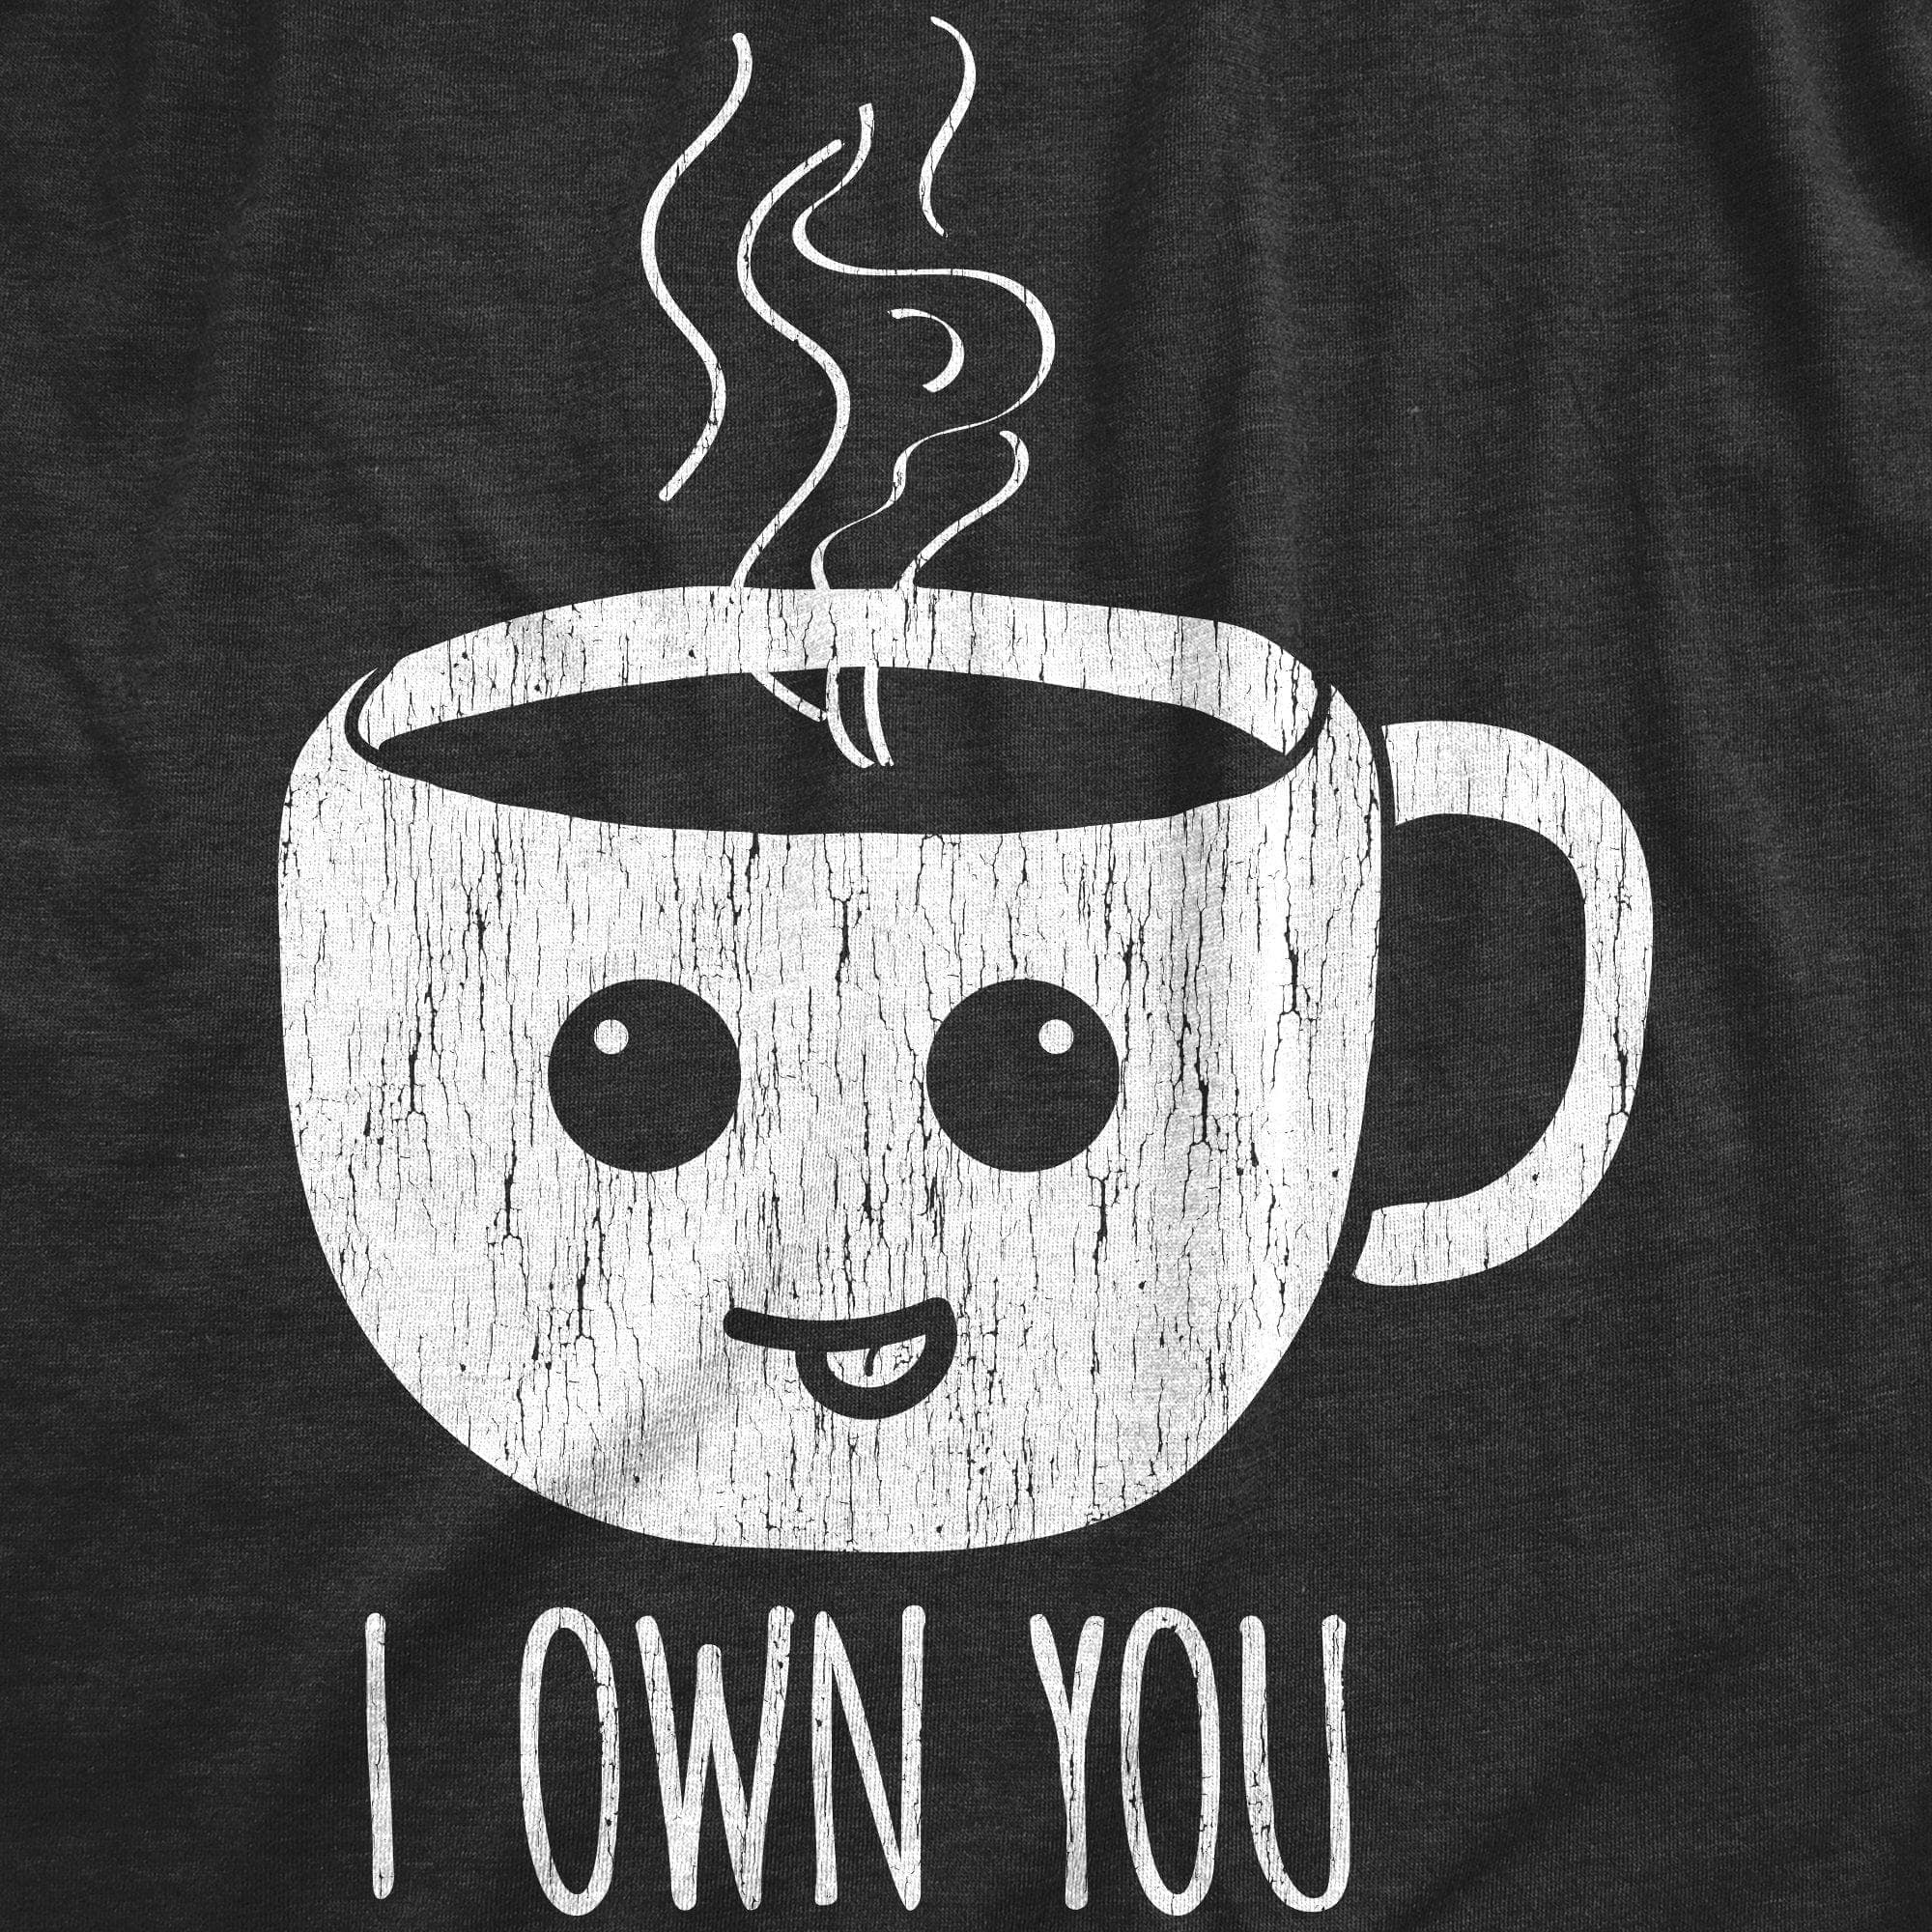 I Own You Coffee Men's Tshirt - Crazy Dog T-Shirts